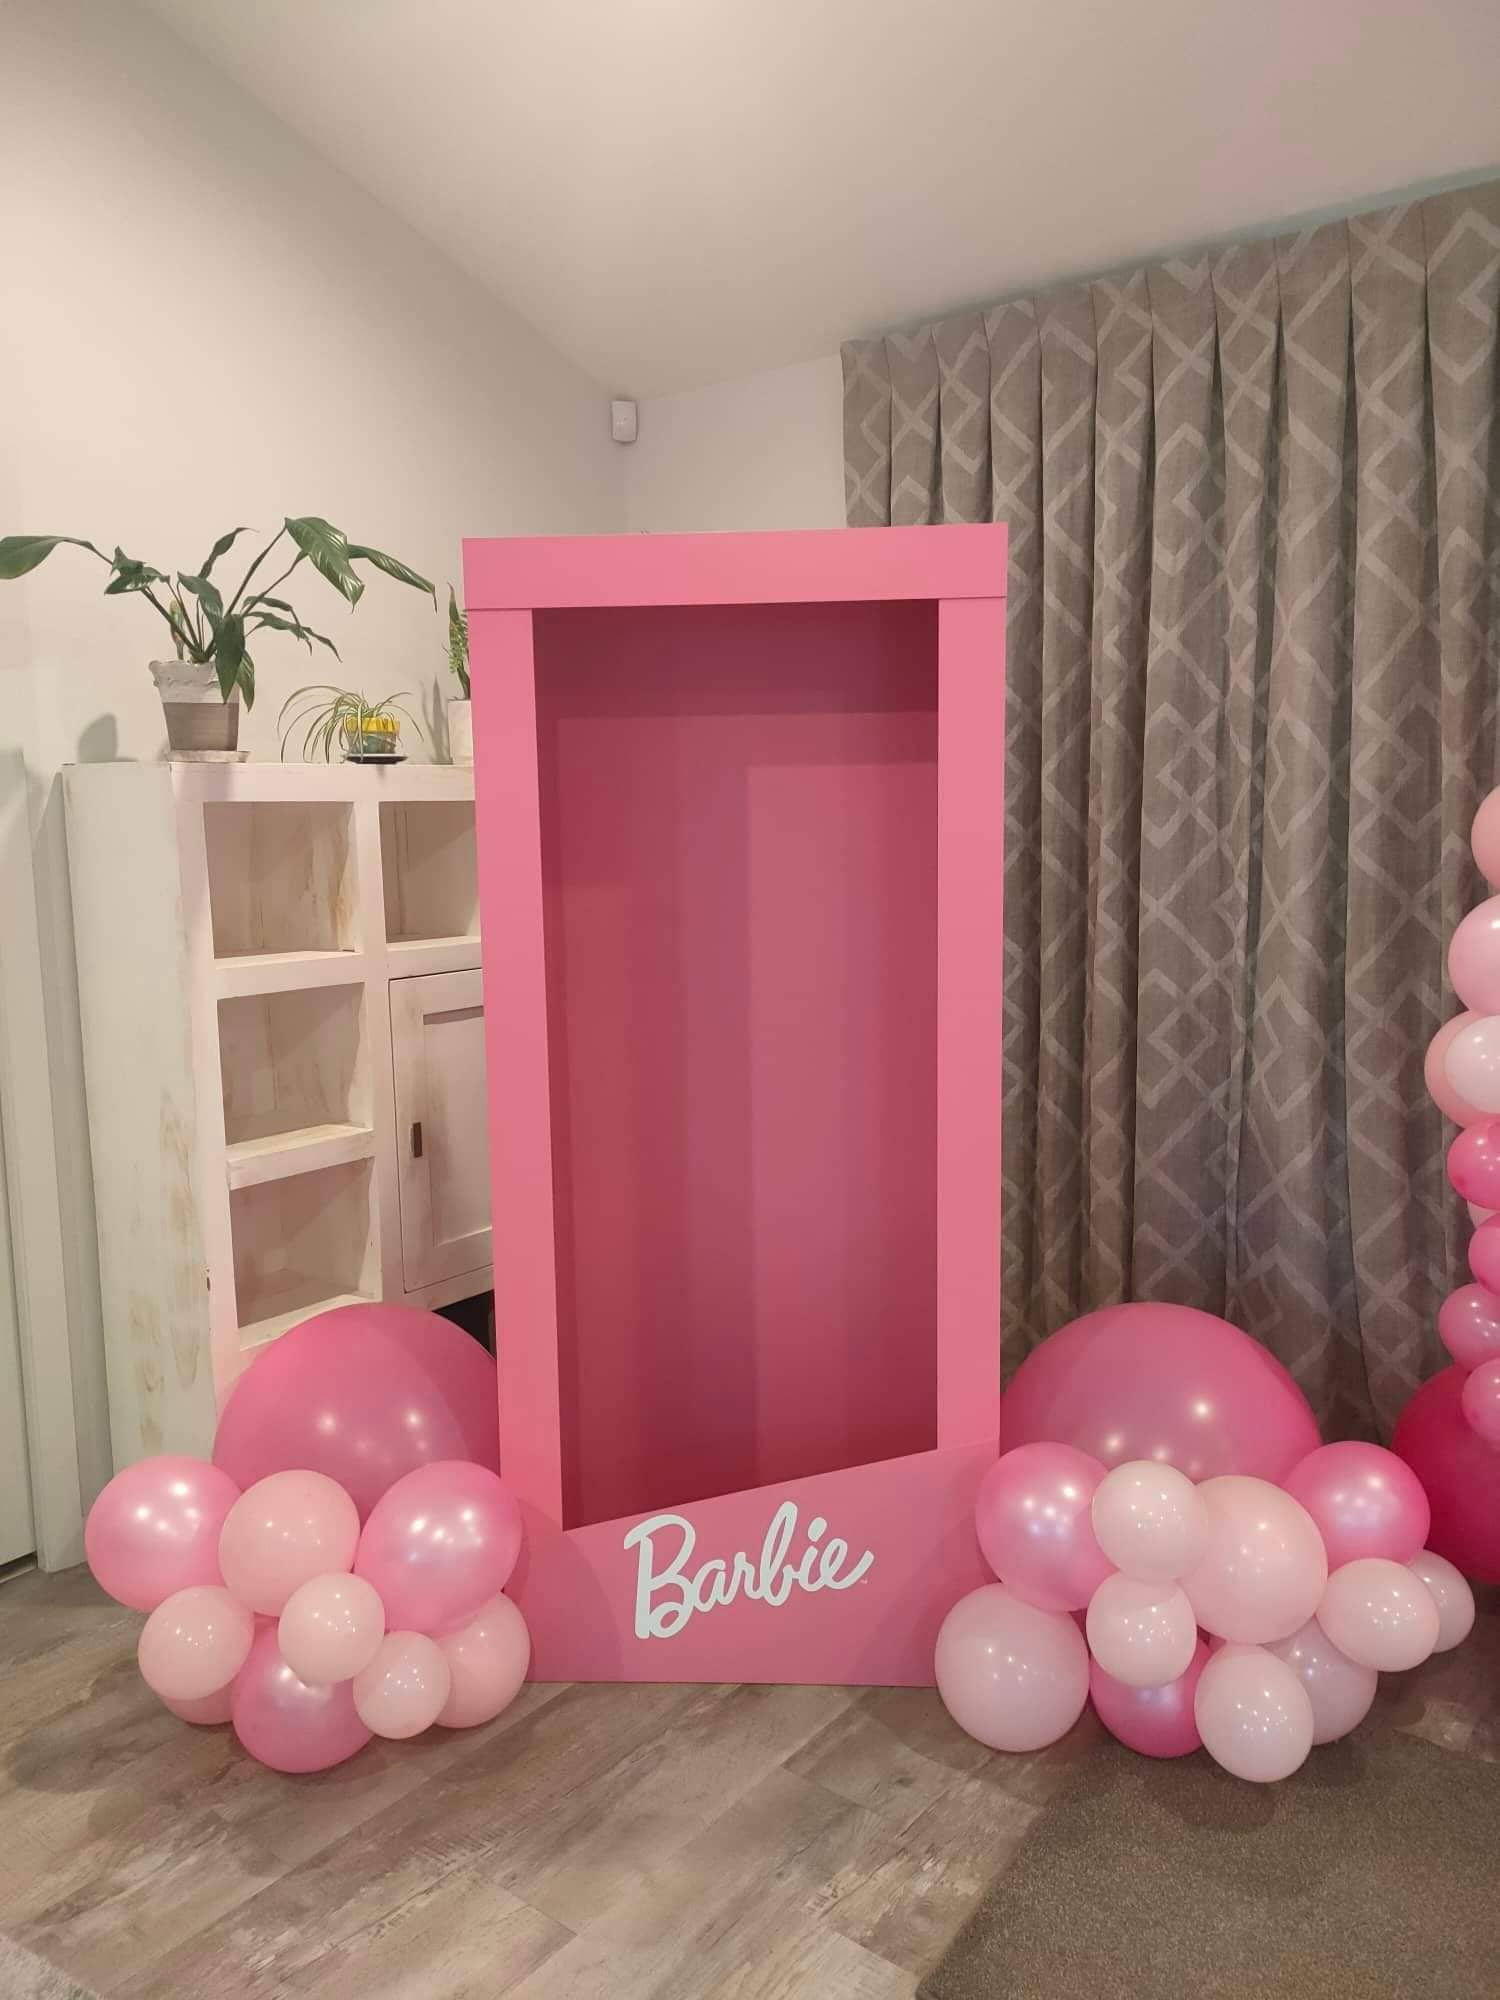 Barbie Box - $80